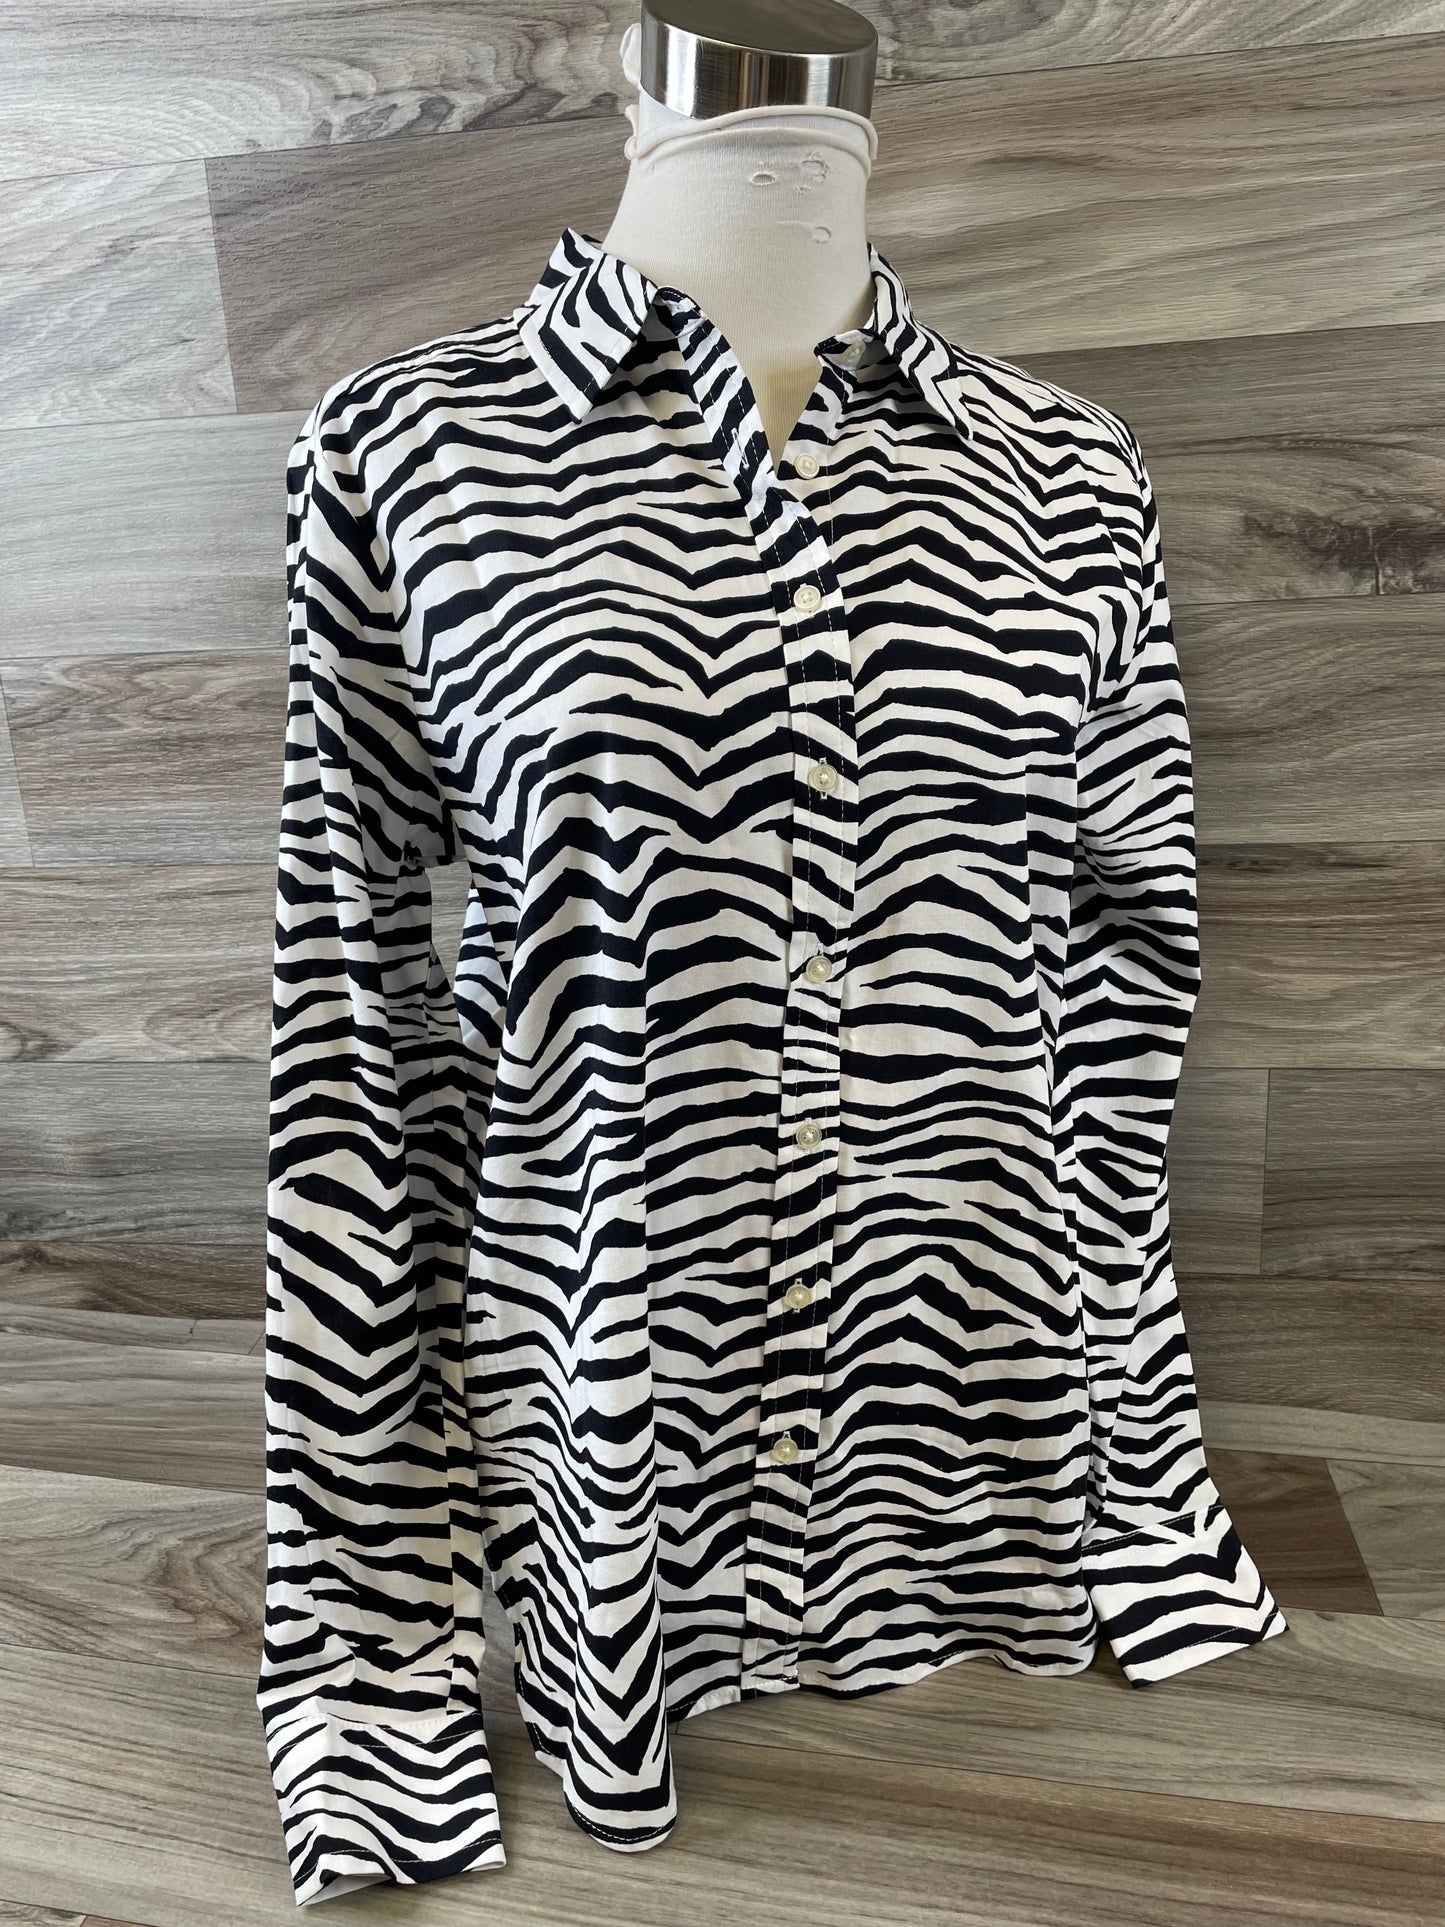 Zebra Print Top Long Sleeve Loft, Size S